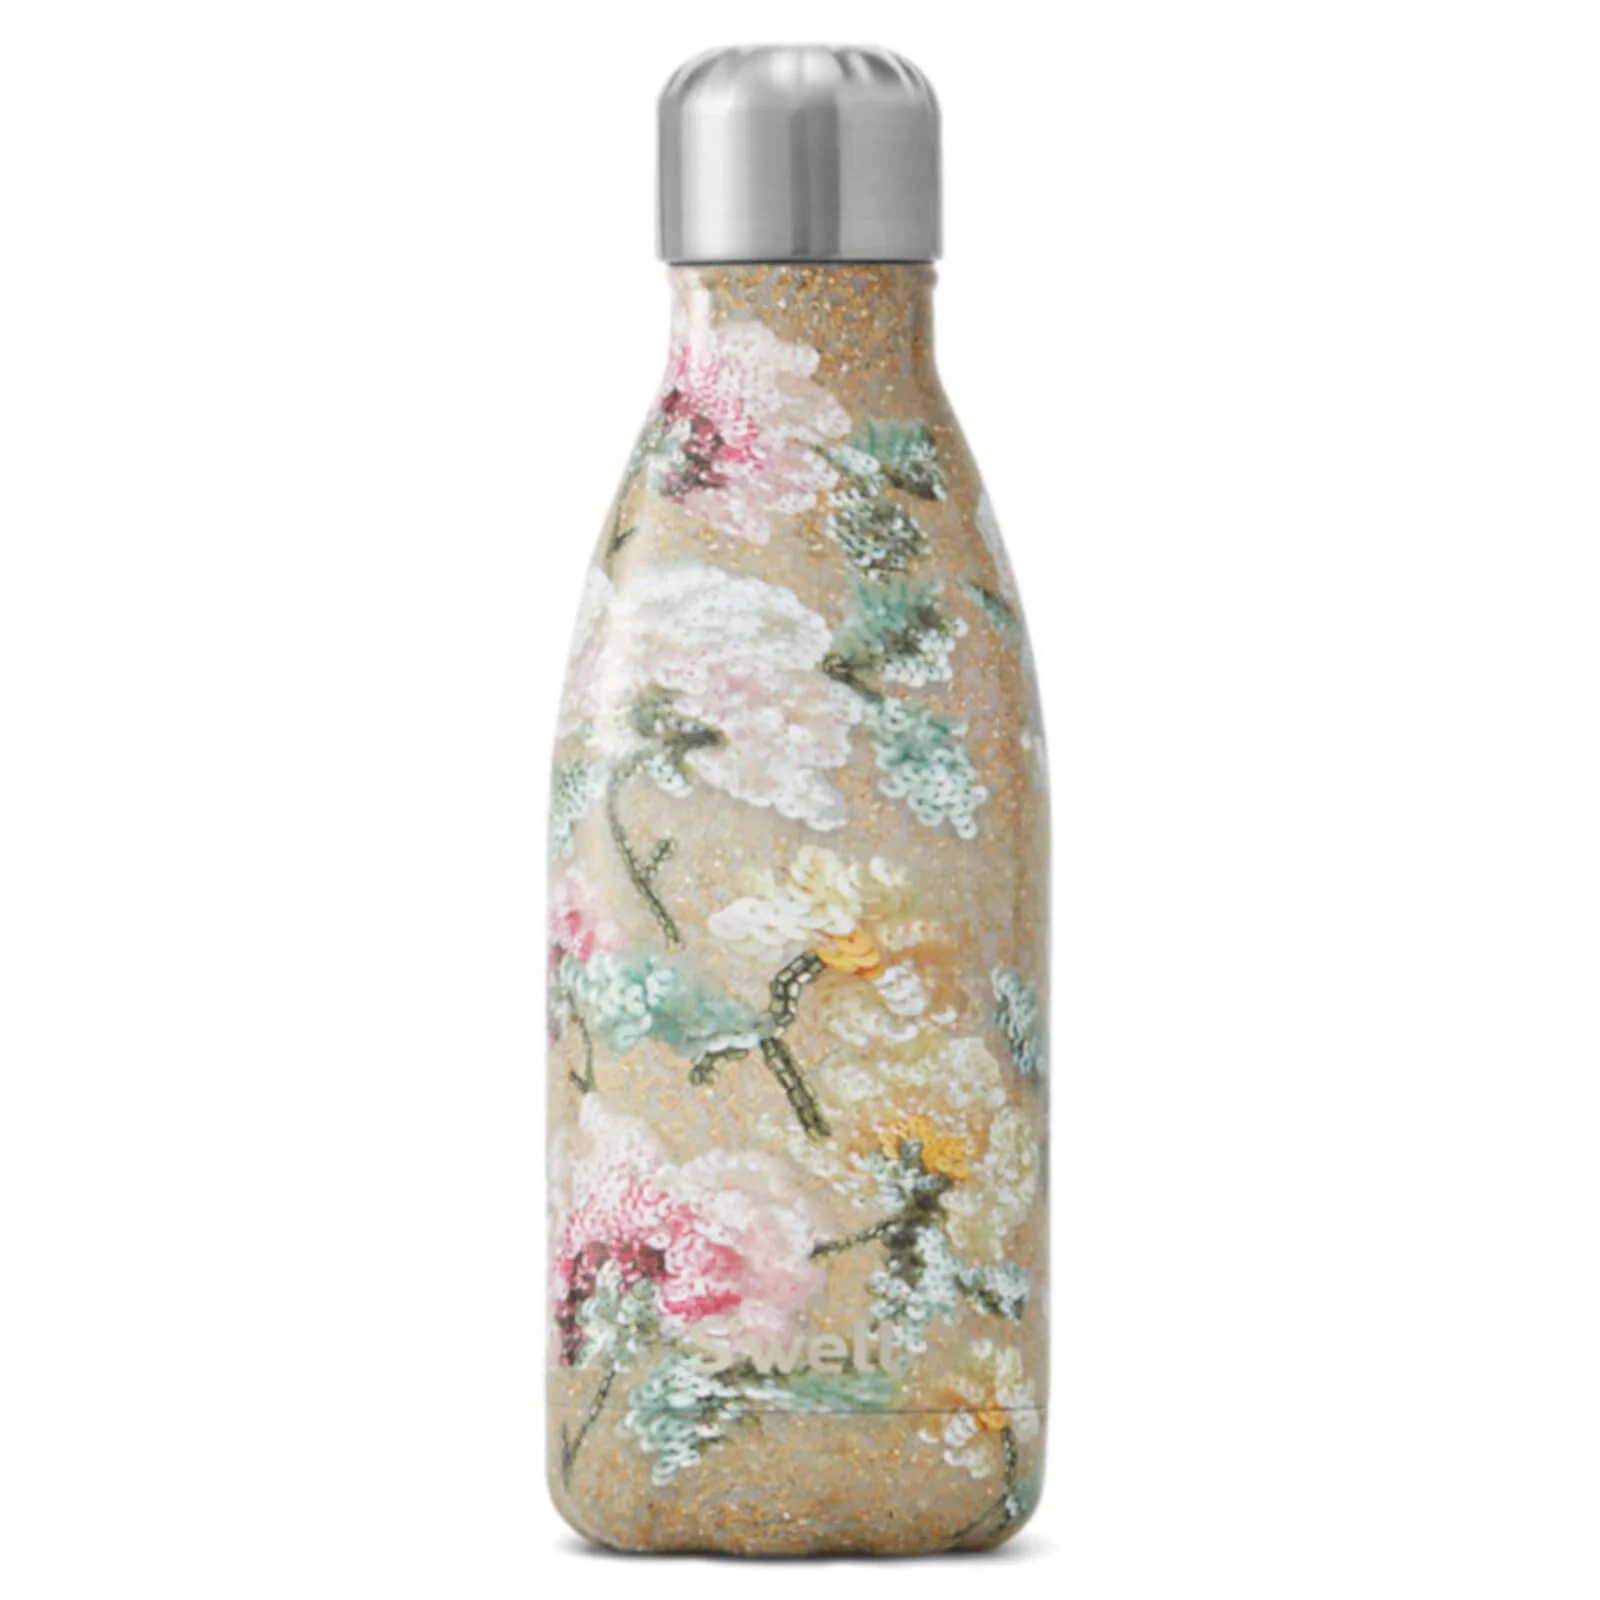 S'well Sequin Vintage Rose Water Bottle - 260ml Image 1